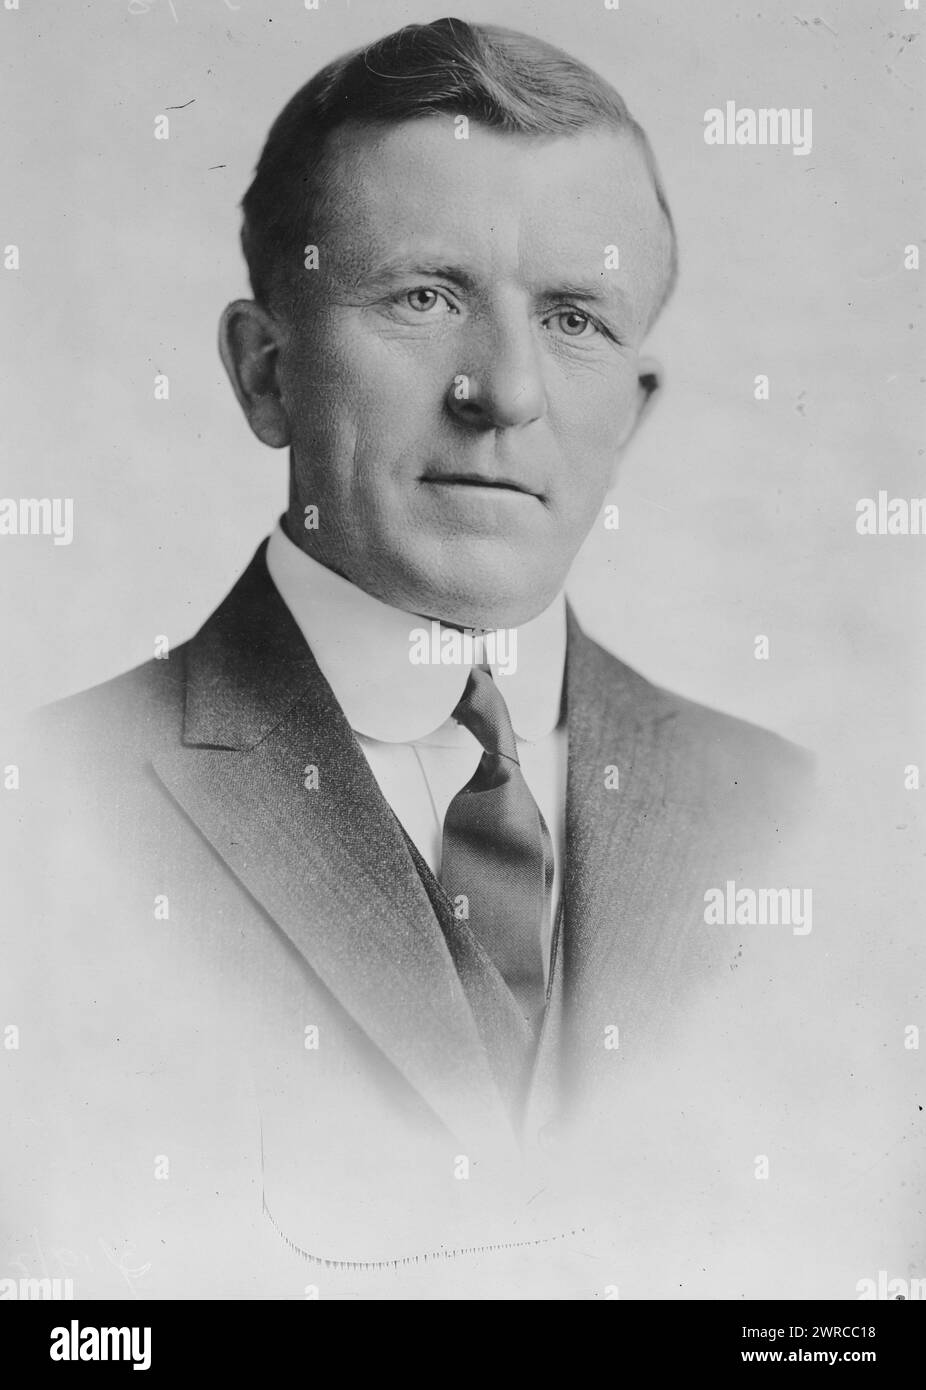 D.W. Davis, Photograph shows David William Davis (1873-1959) who served as Governor of Idaho from 1919 to 1923., 1918 Nov. 23, Glass negatives, 1 negative: glass Stock Photo